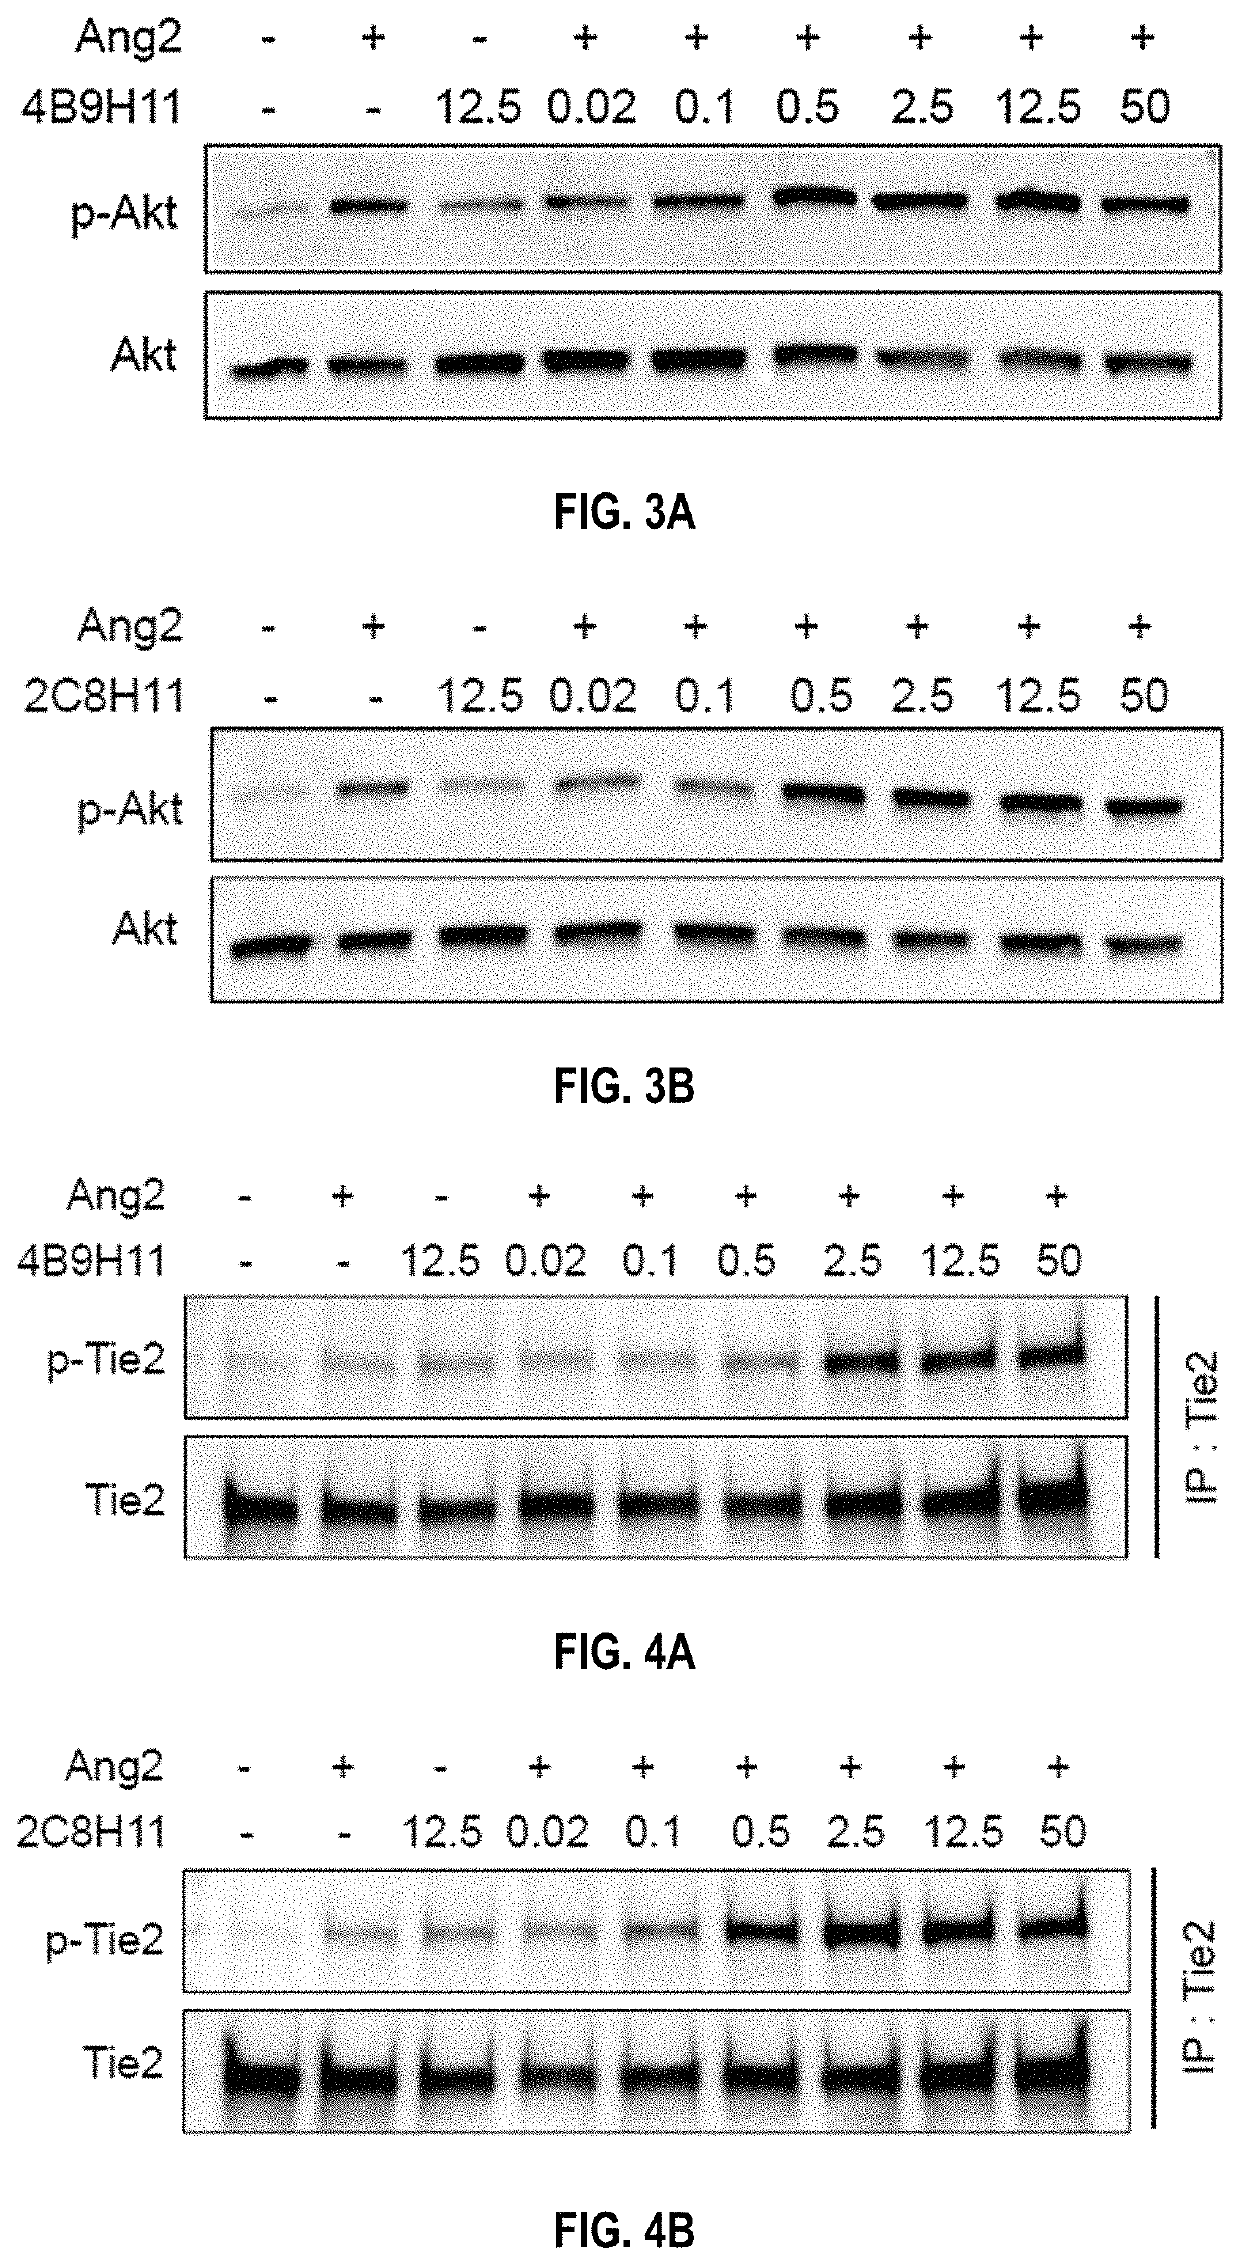 Anti-angiopoietin-2 antibodies that induce Tie2 activation